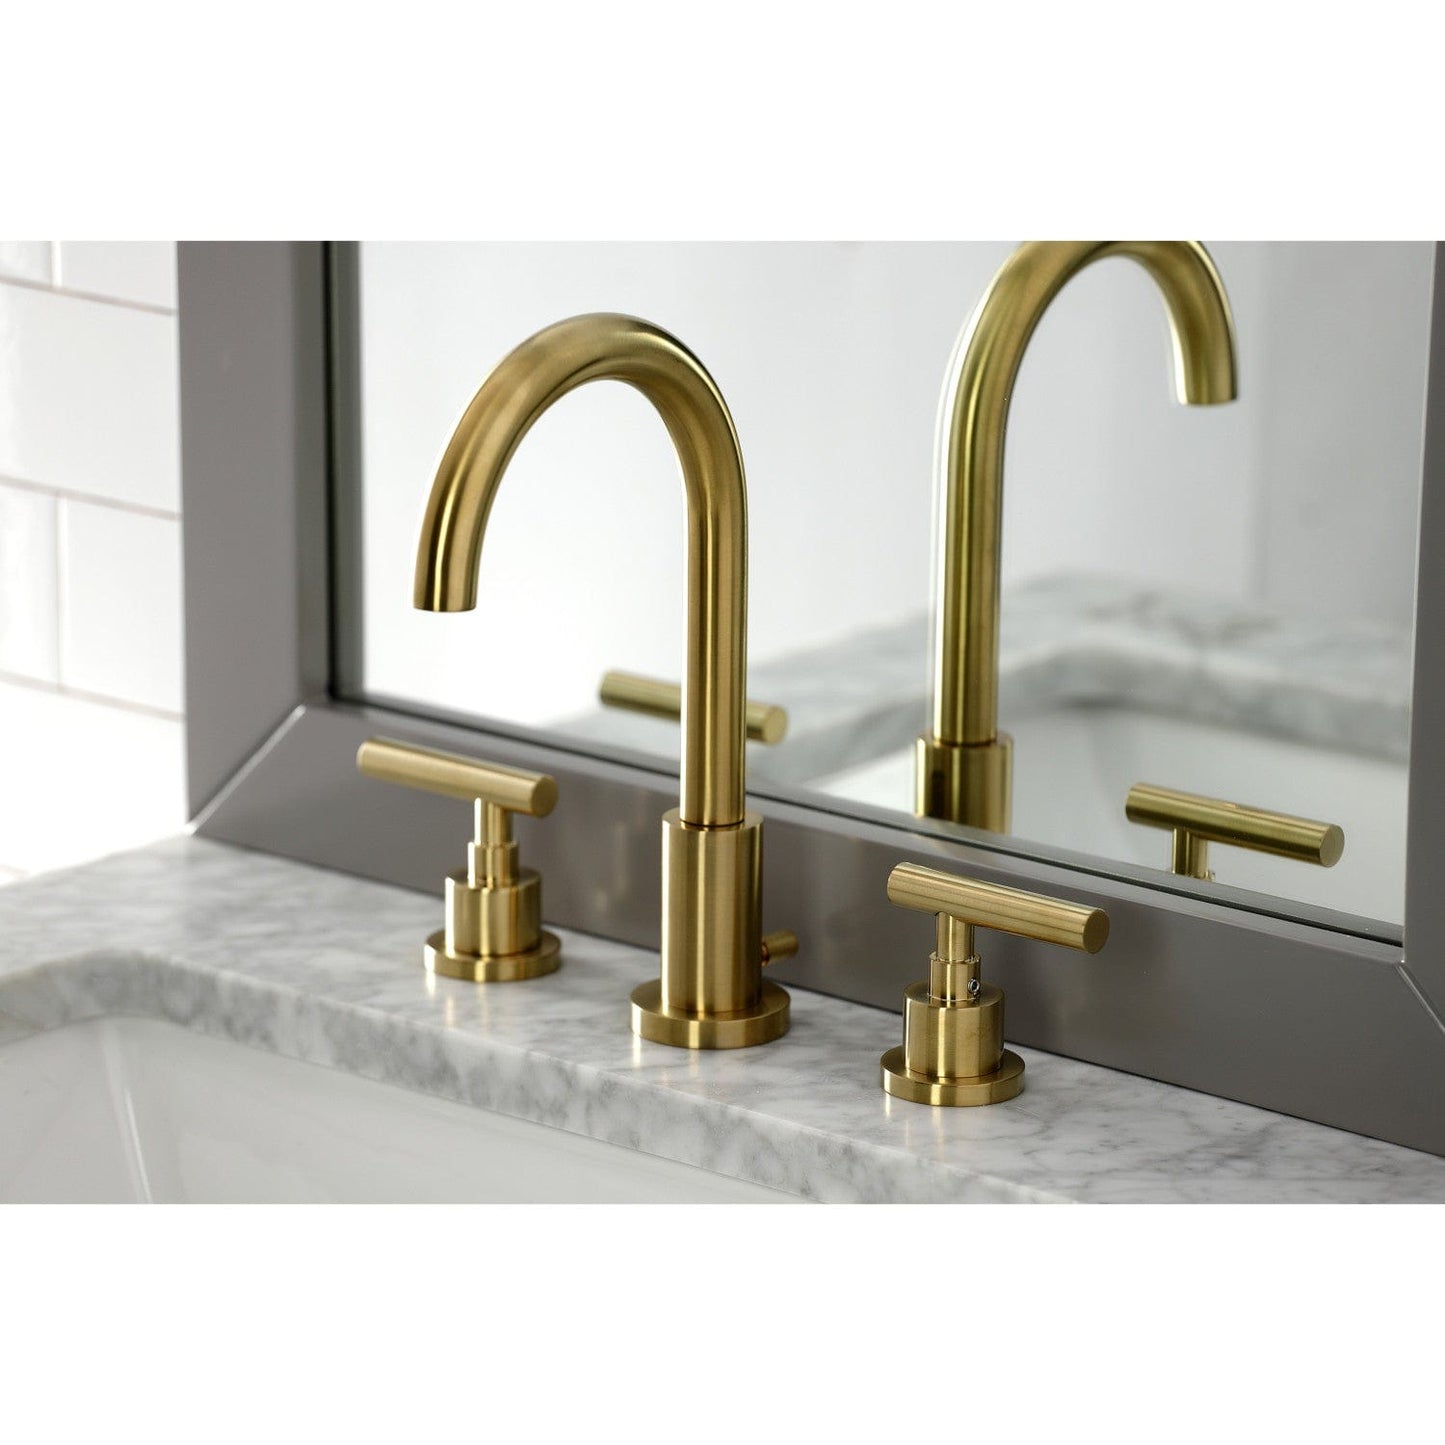 KINGSTON Brass Manhattan Widespread Bathroom Faucet with Brass Pop-Up - Brushed Brass